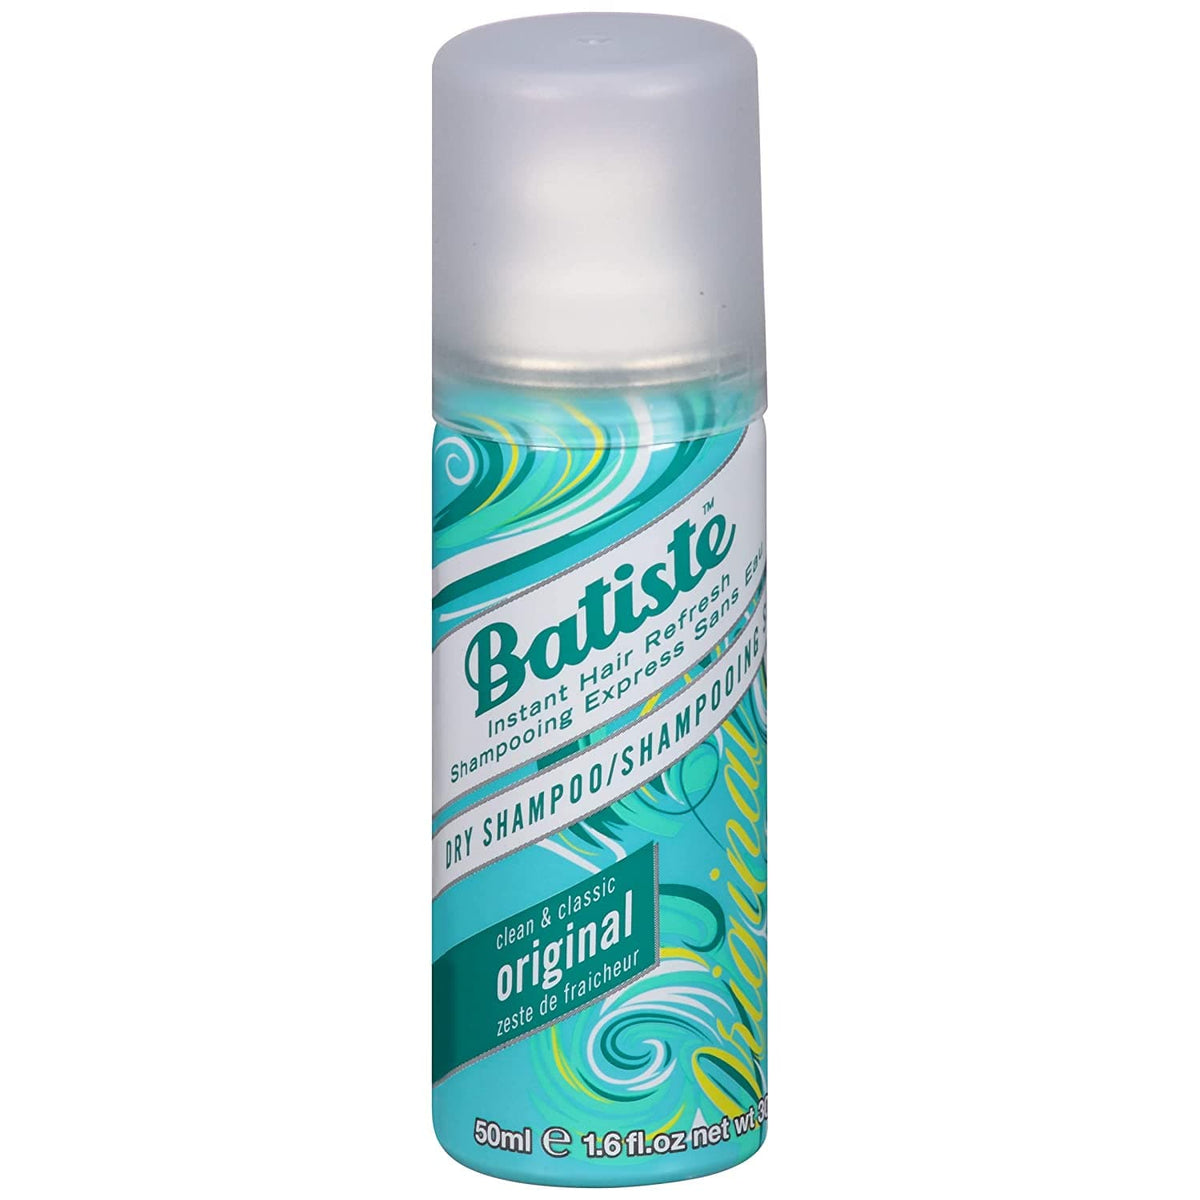 Batiste Dry Shampoo Original - 50ml - Premium Health & Beauty from Batiste - Just Rs 750.00! Shop now at Cozmetica